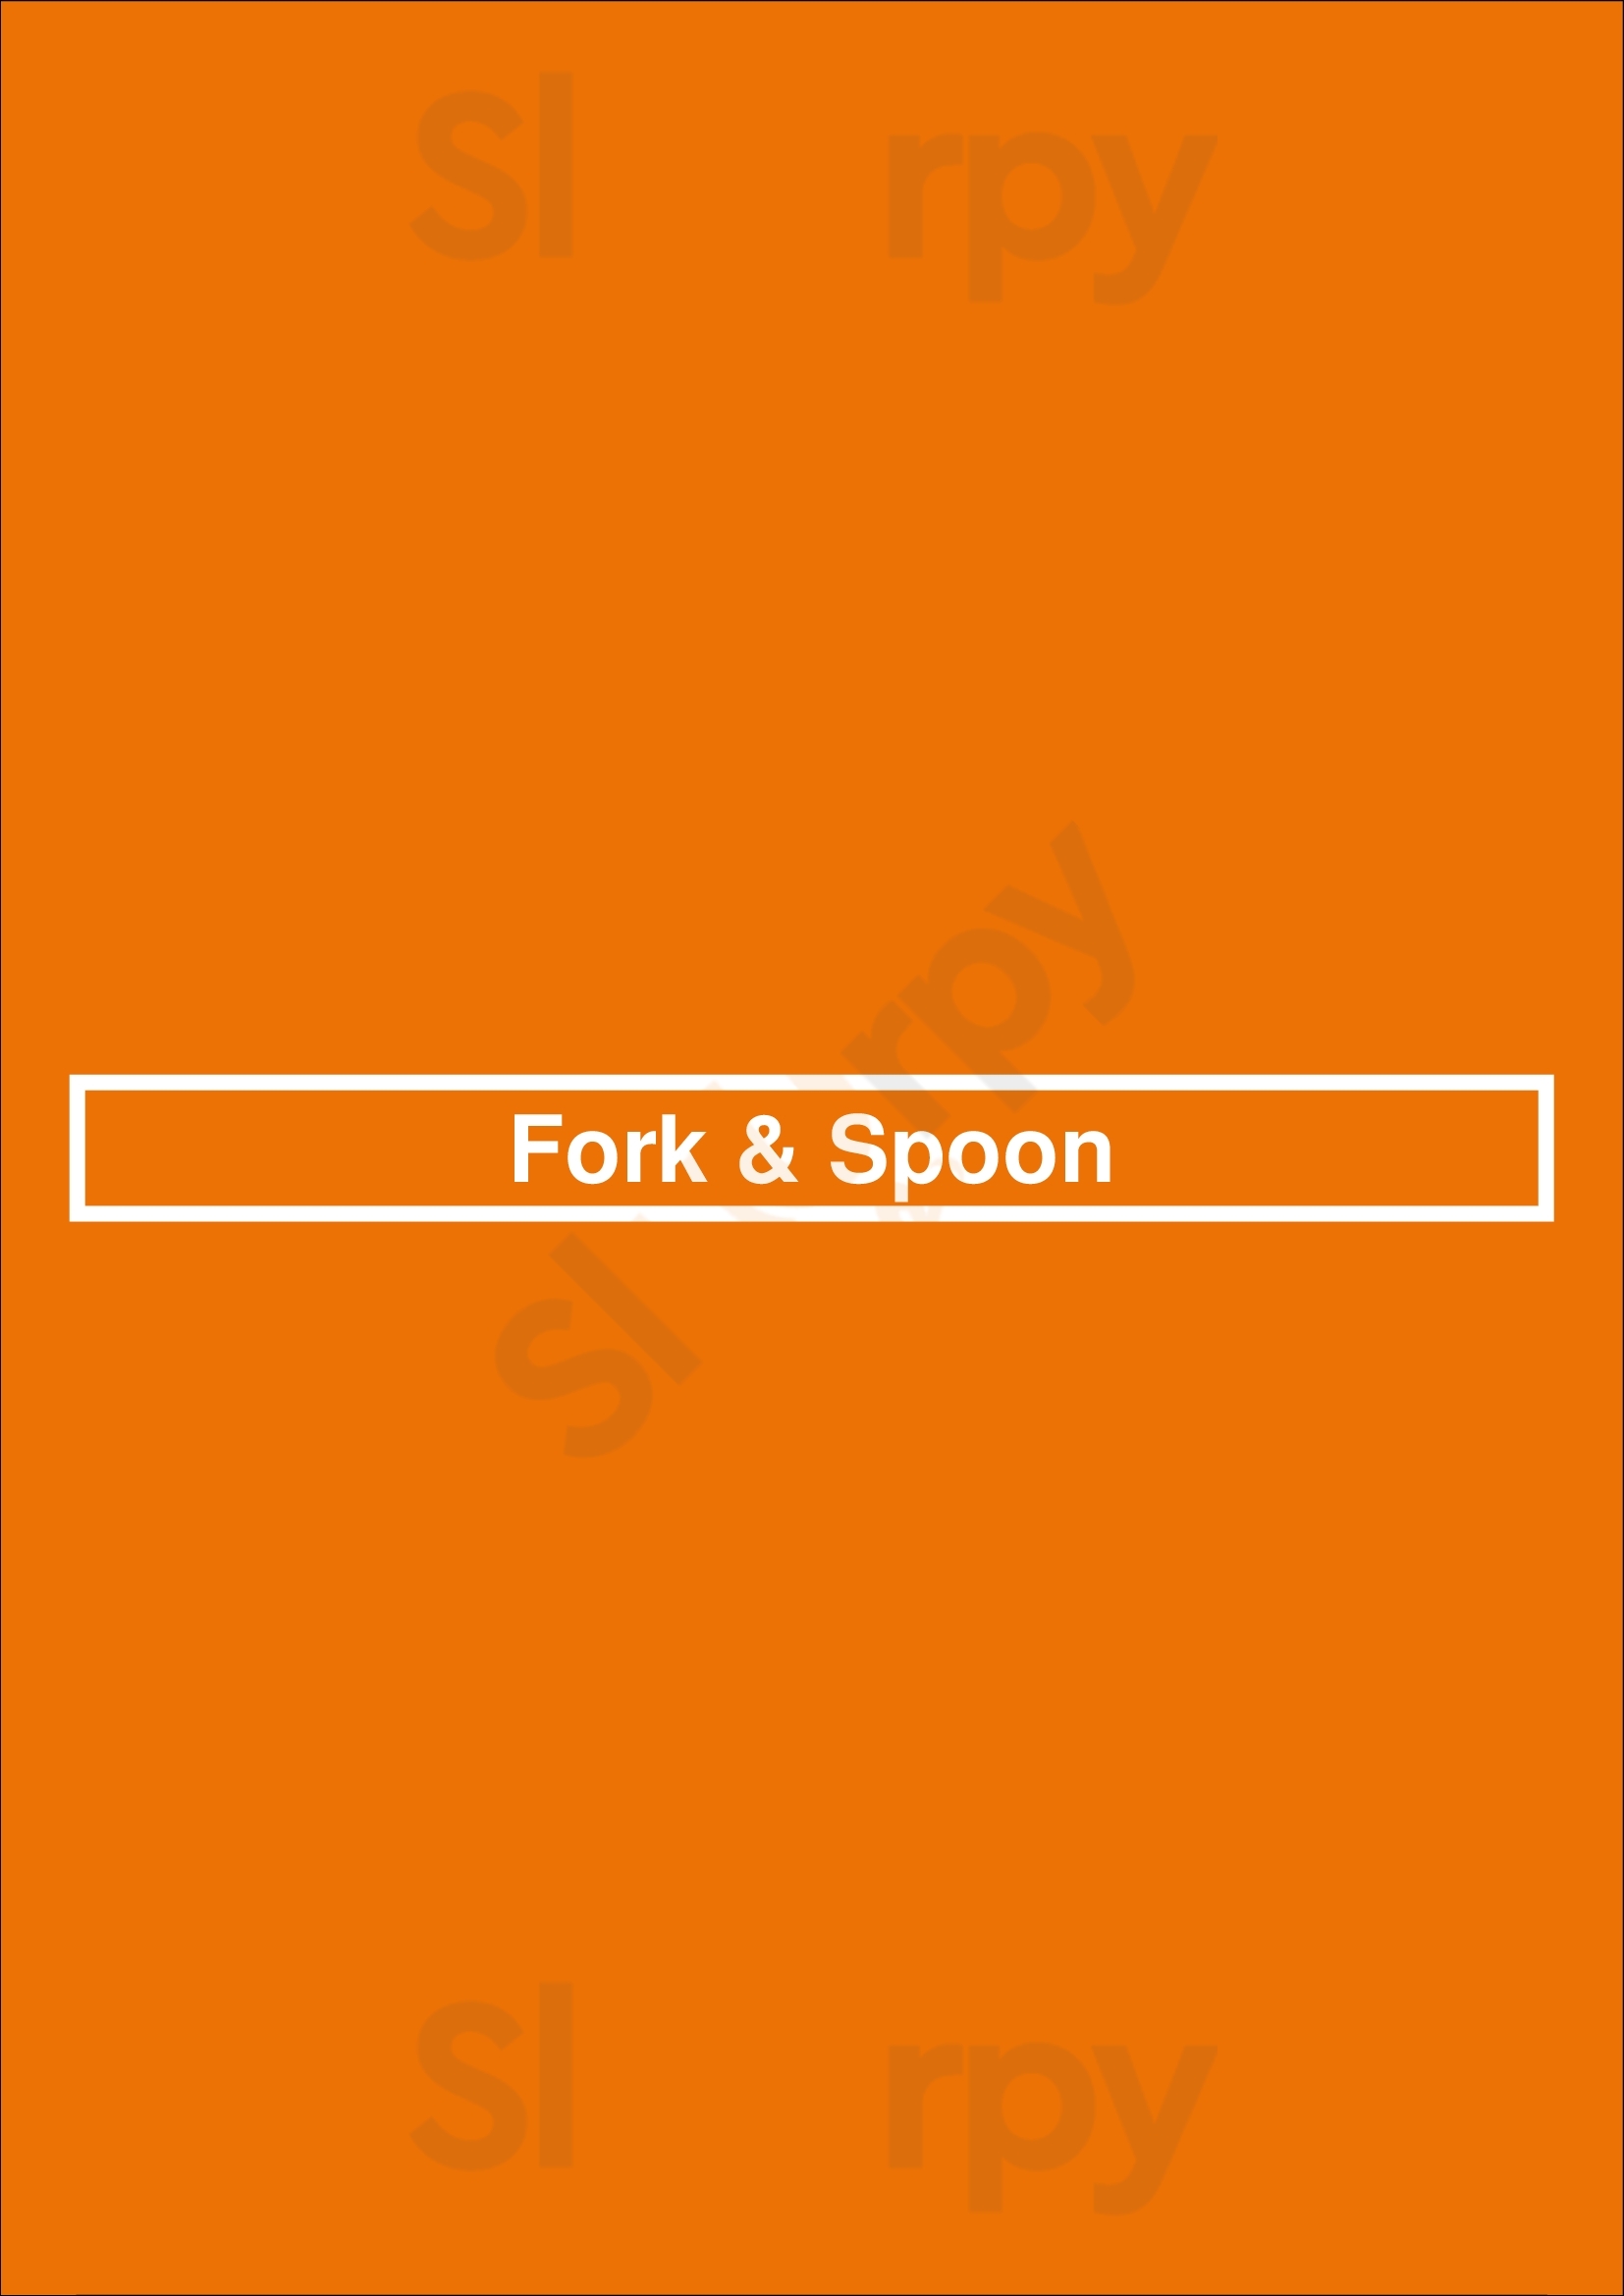 Fork & Spoon Denver Menu - 1